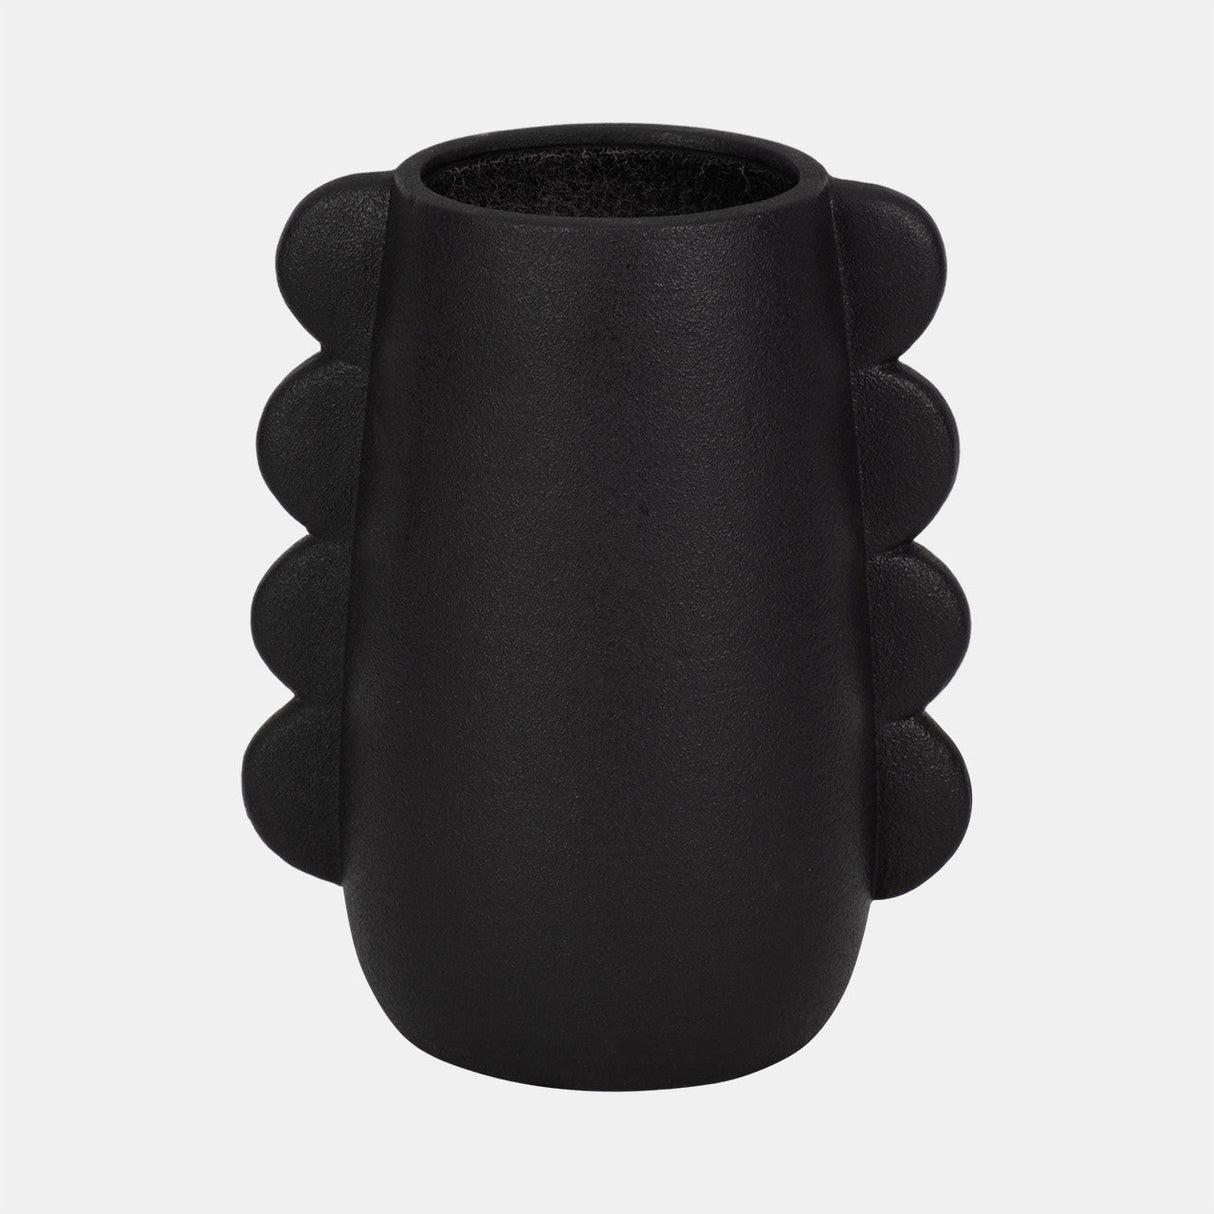 Dol, 7" Eared Vase, Black